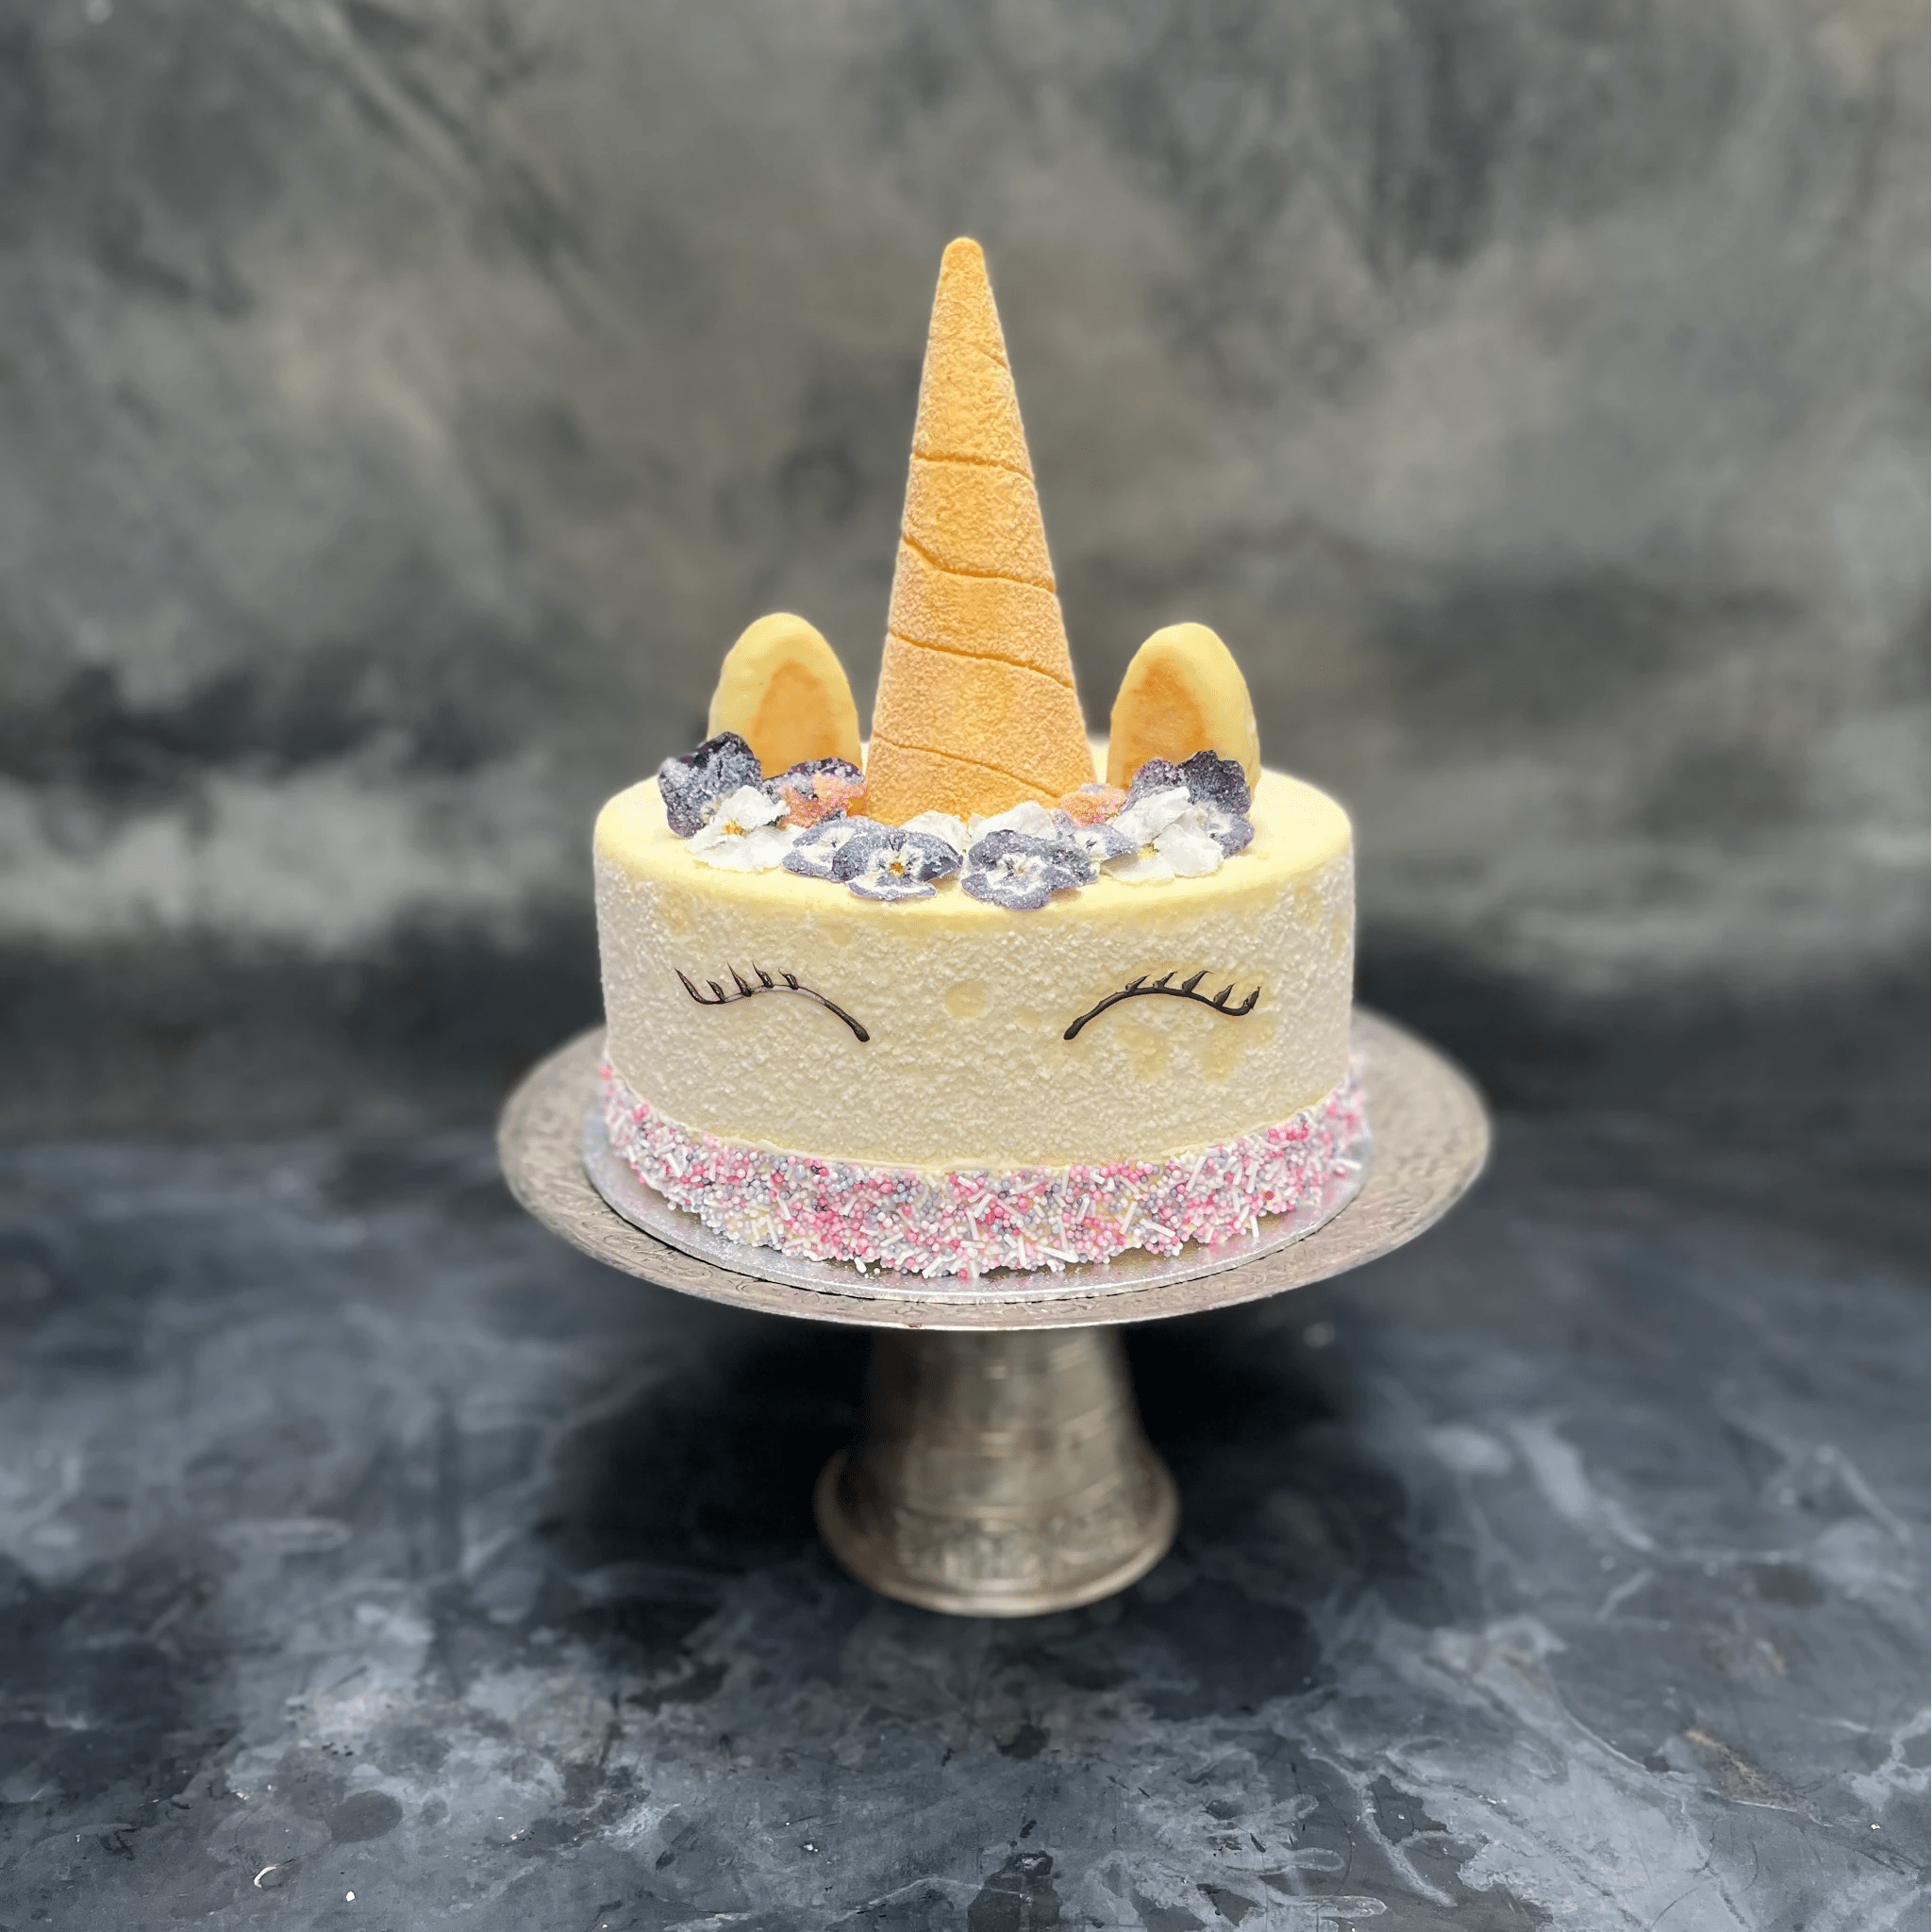 UNICORN CELEBRATION CAKE - Ruby Violet Ice Cream & Sorbet